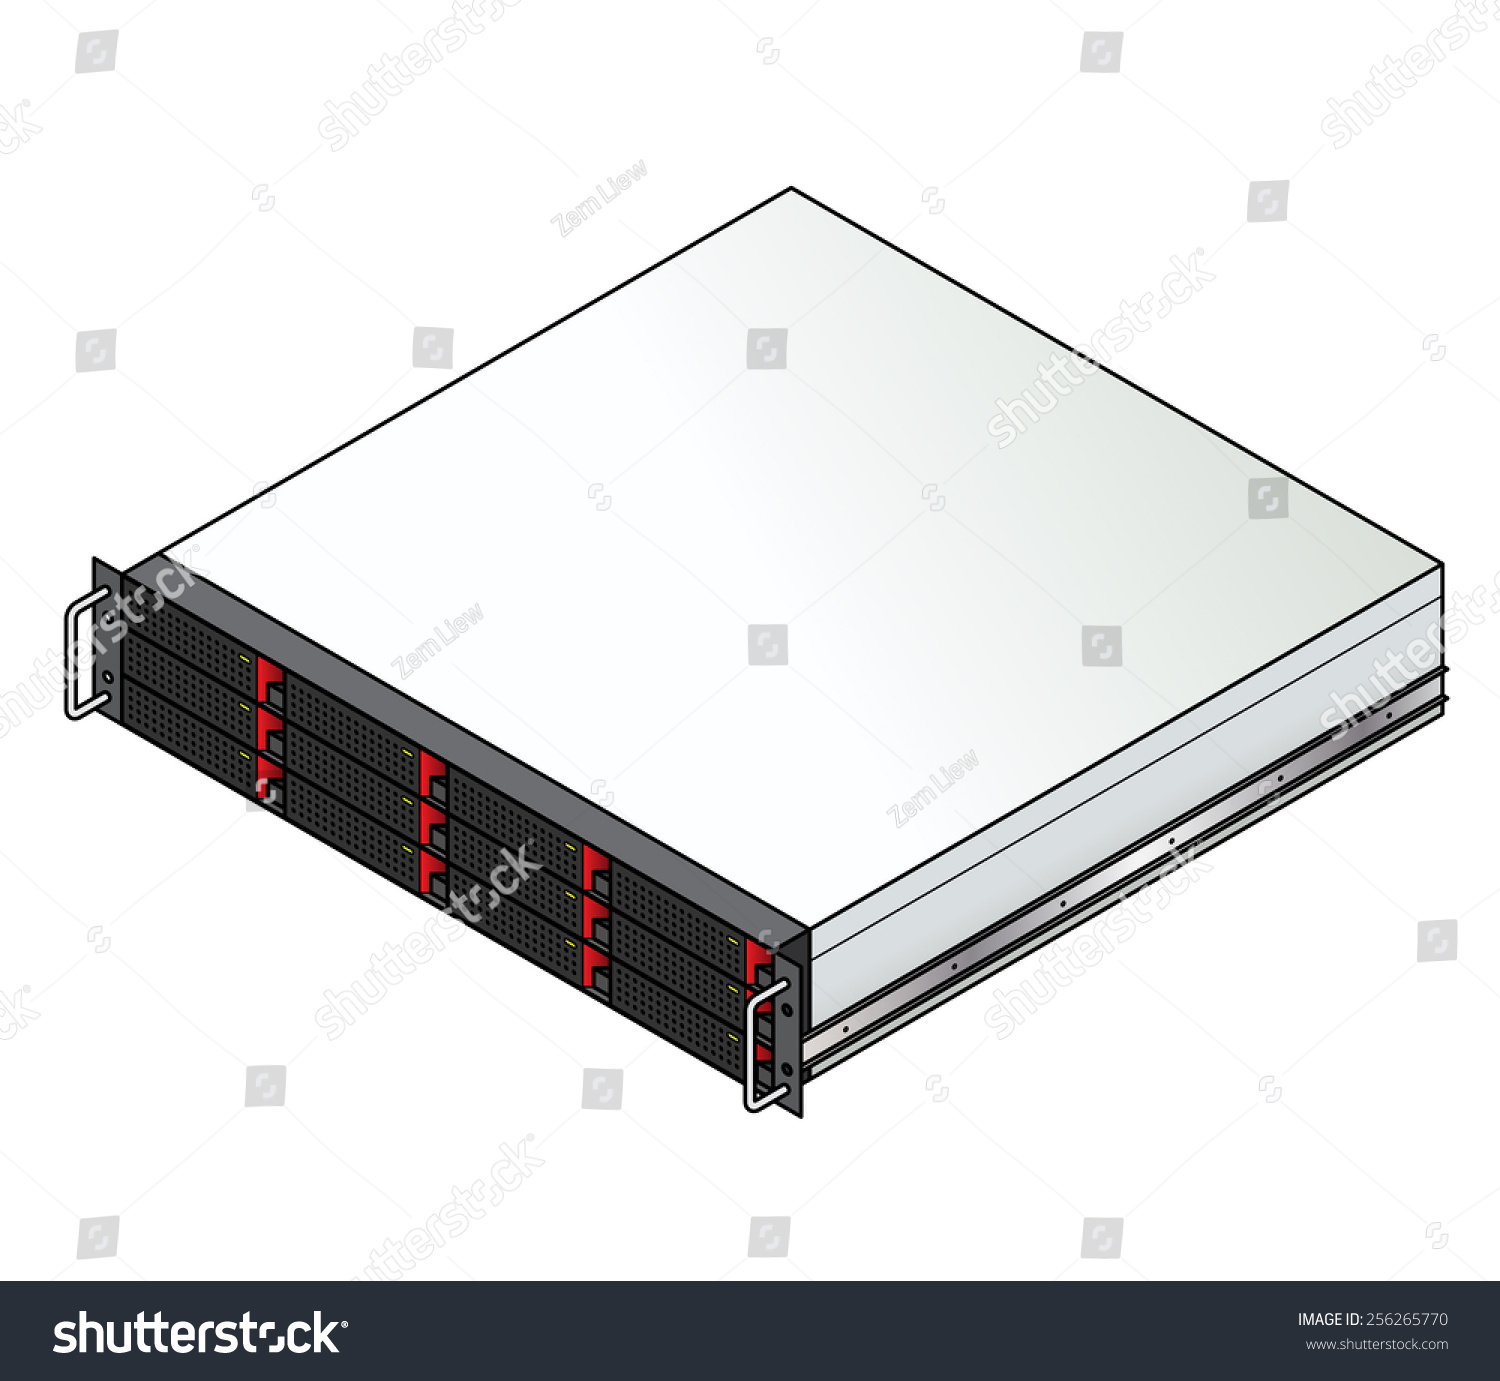 SVG of Rack-mount server component: a 2u storage / NAS (Network Attached Storage)  enclosure with 12 storage units installed. svg